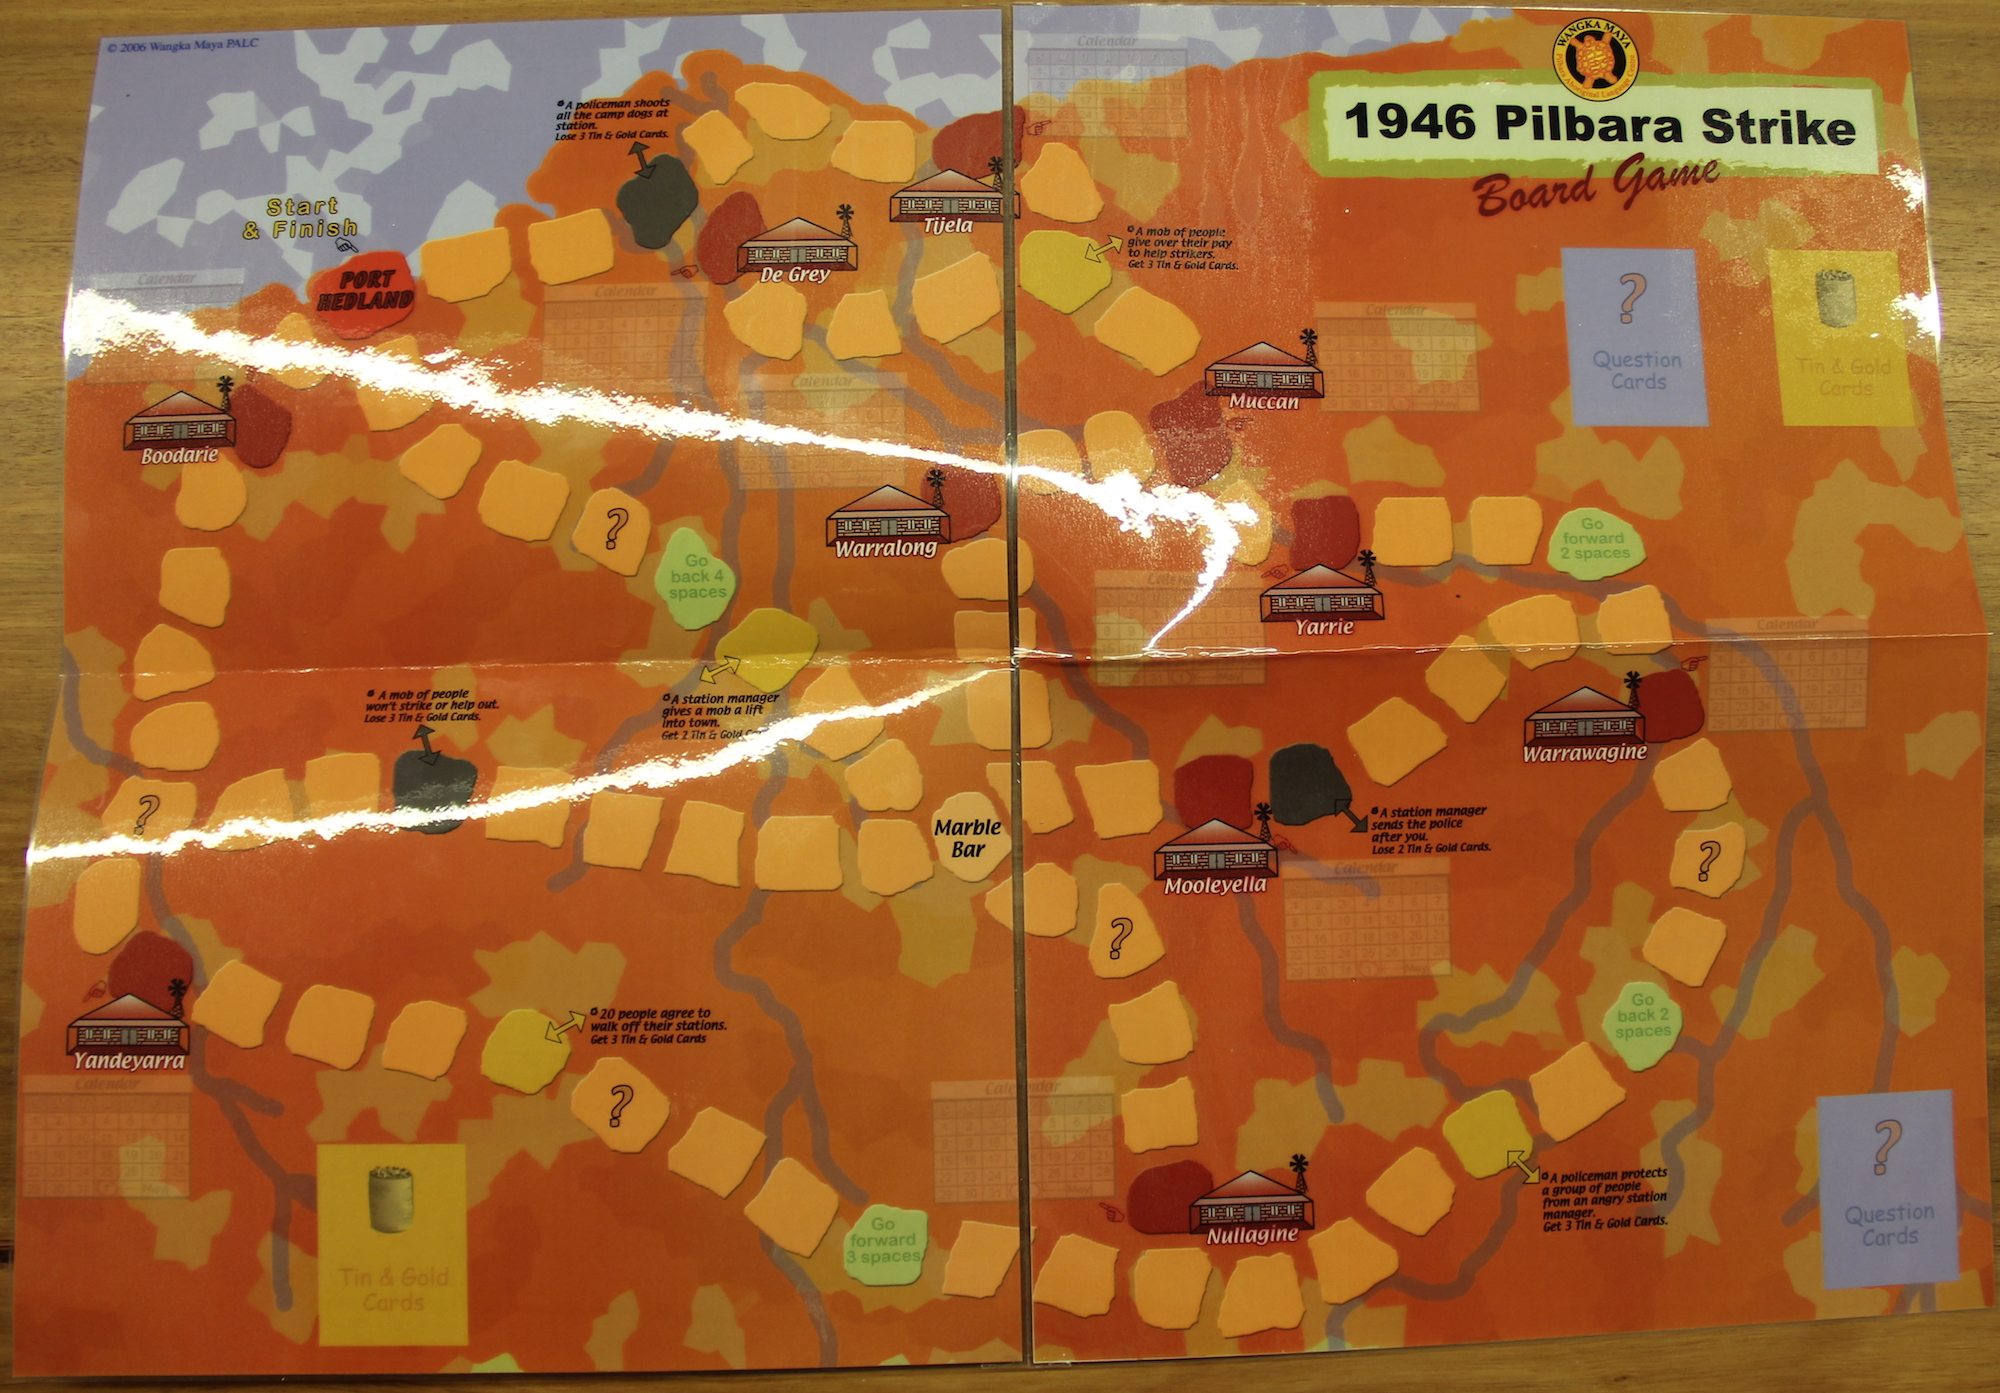 The 1946 Pilbara Strike Game Board